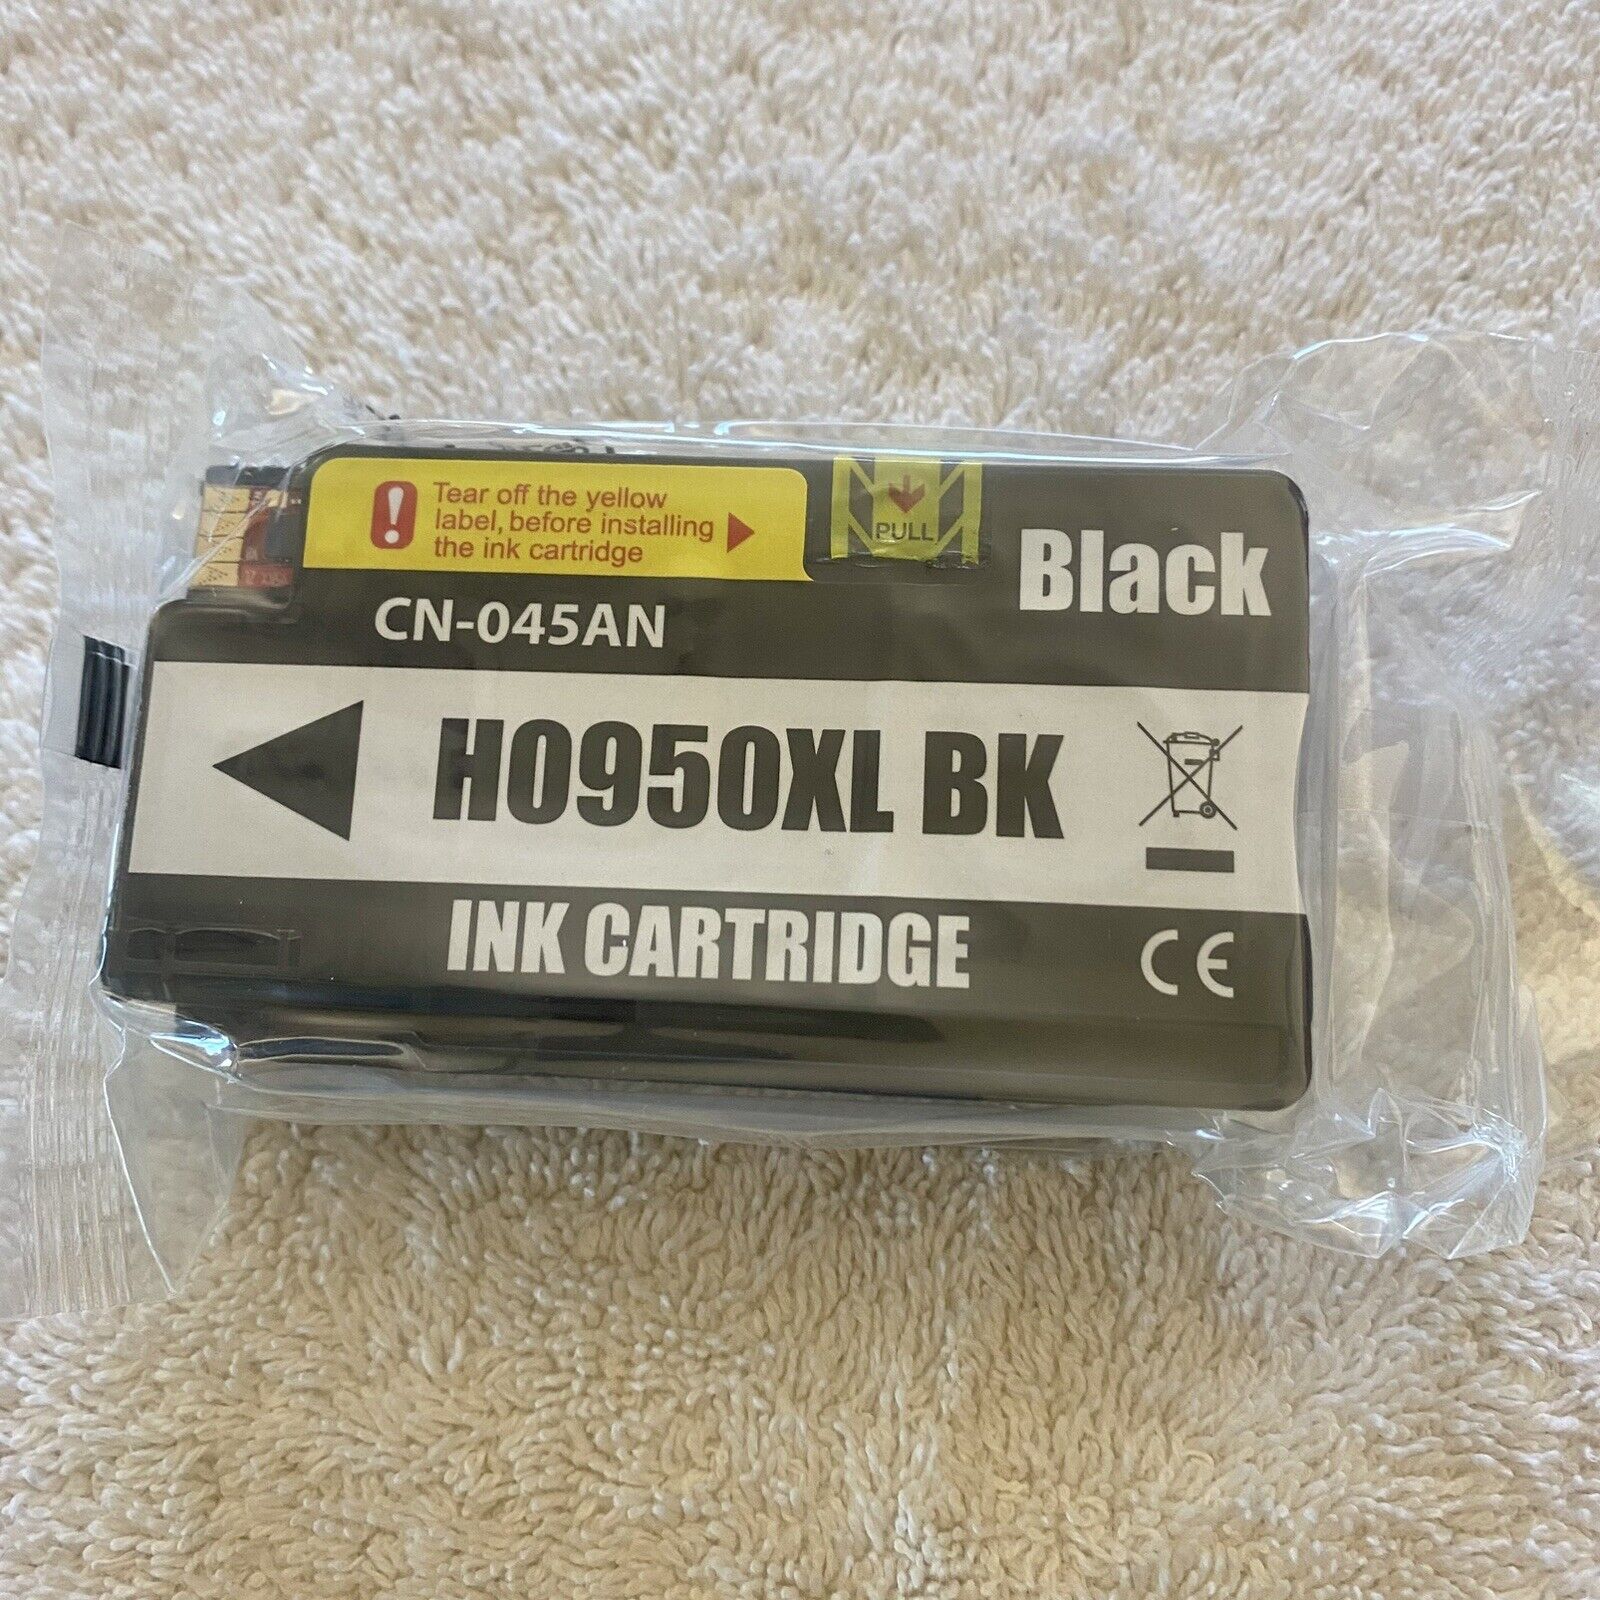 H-950XLBK High Yield Black Ink Cartridge New In SEALED PACKAGING